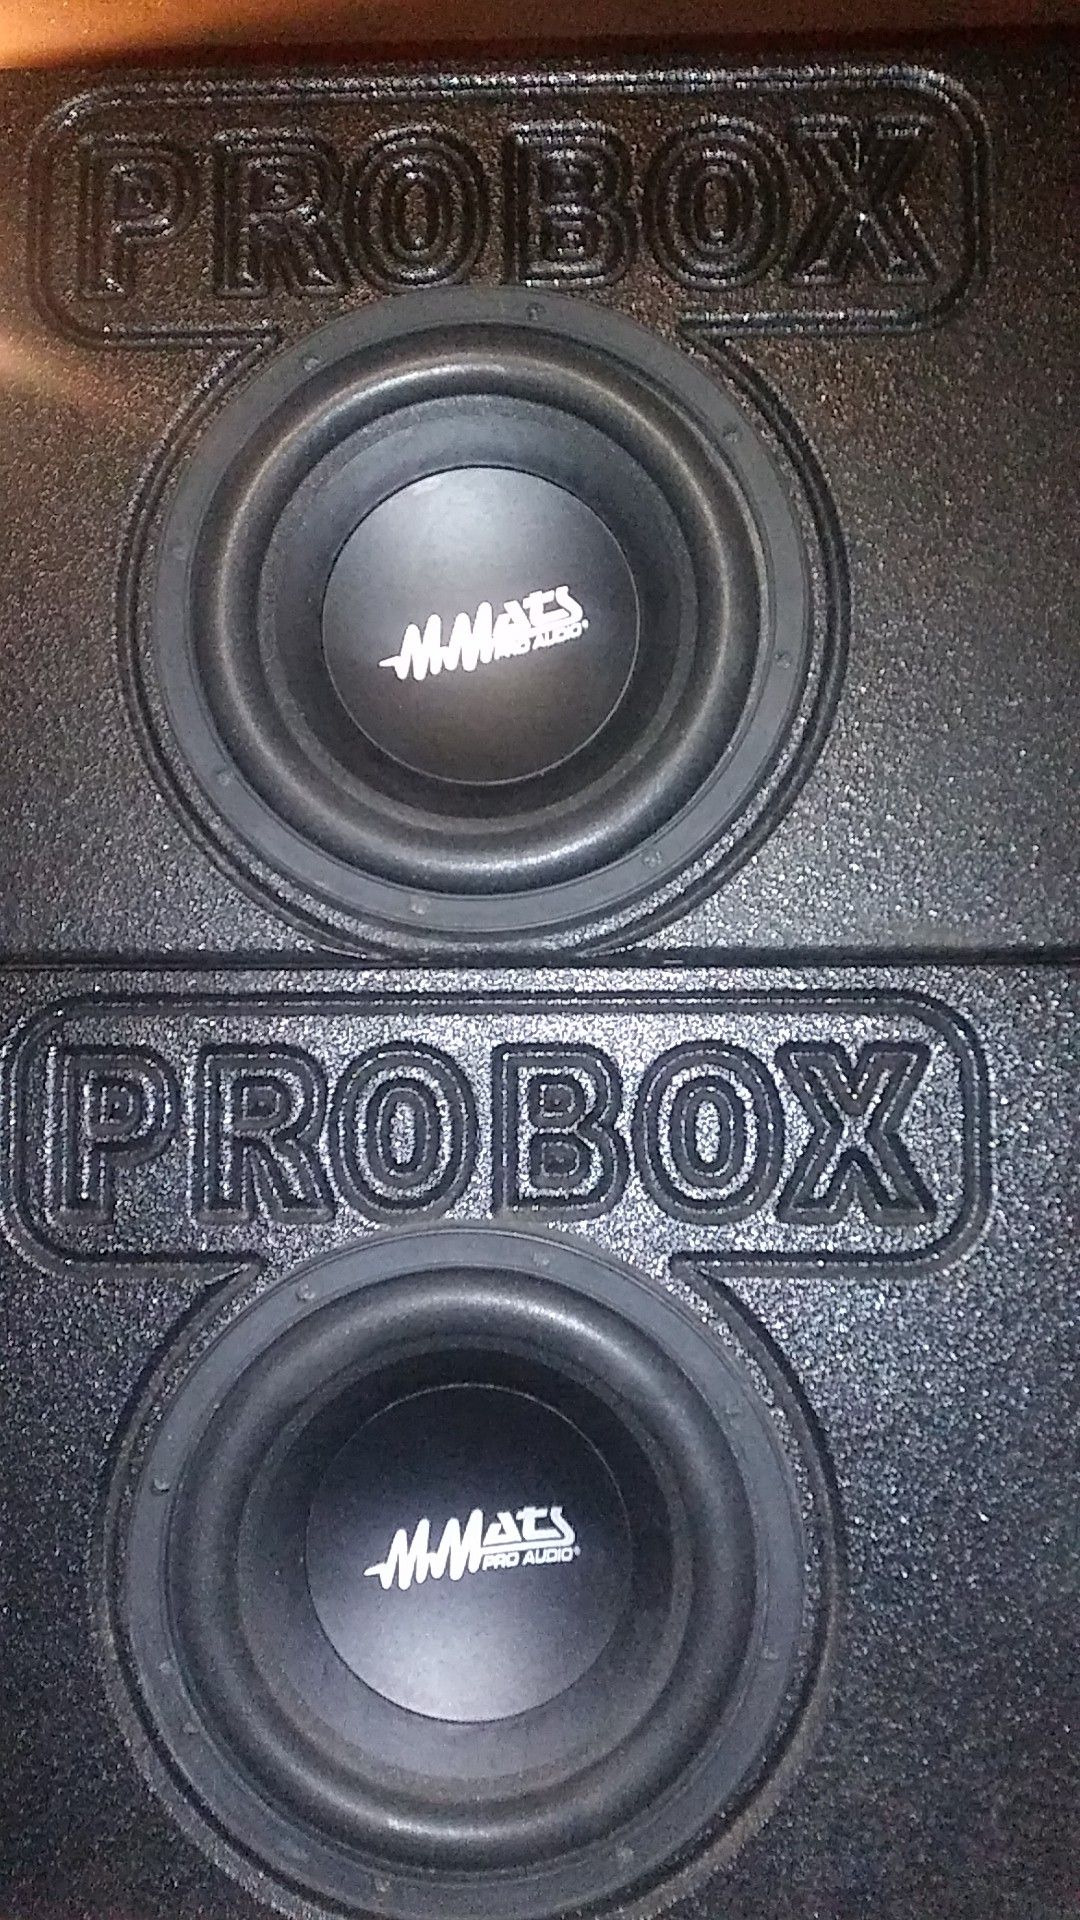 New 10 inch matts pro audio